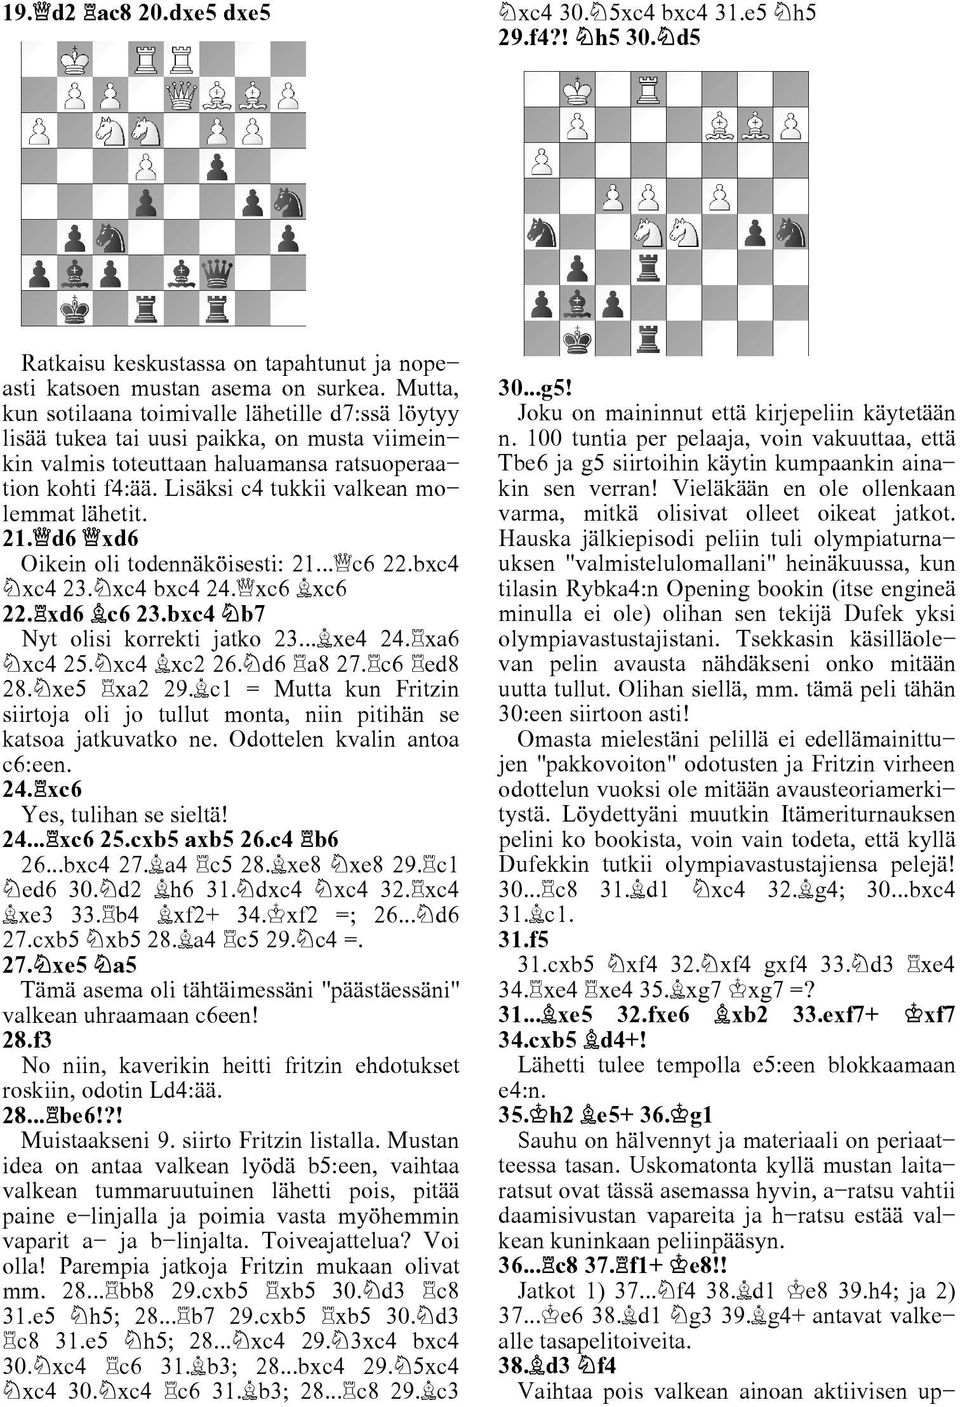 Lisäksi c4 tukkii valkean mo lemmat lähetit. 21. d6 xd6 Oikein oli todennäköisesti: 21... c6 22.bxc4 xc4 23. xc4 bxc4 24. xc6 xc6 22. xd6 c6 23.bxc4 b7 Nyt olisi korrekti jatko 23... xe4 24.